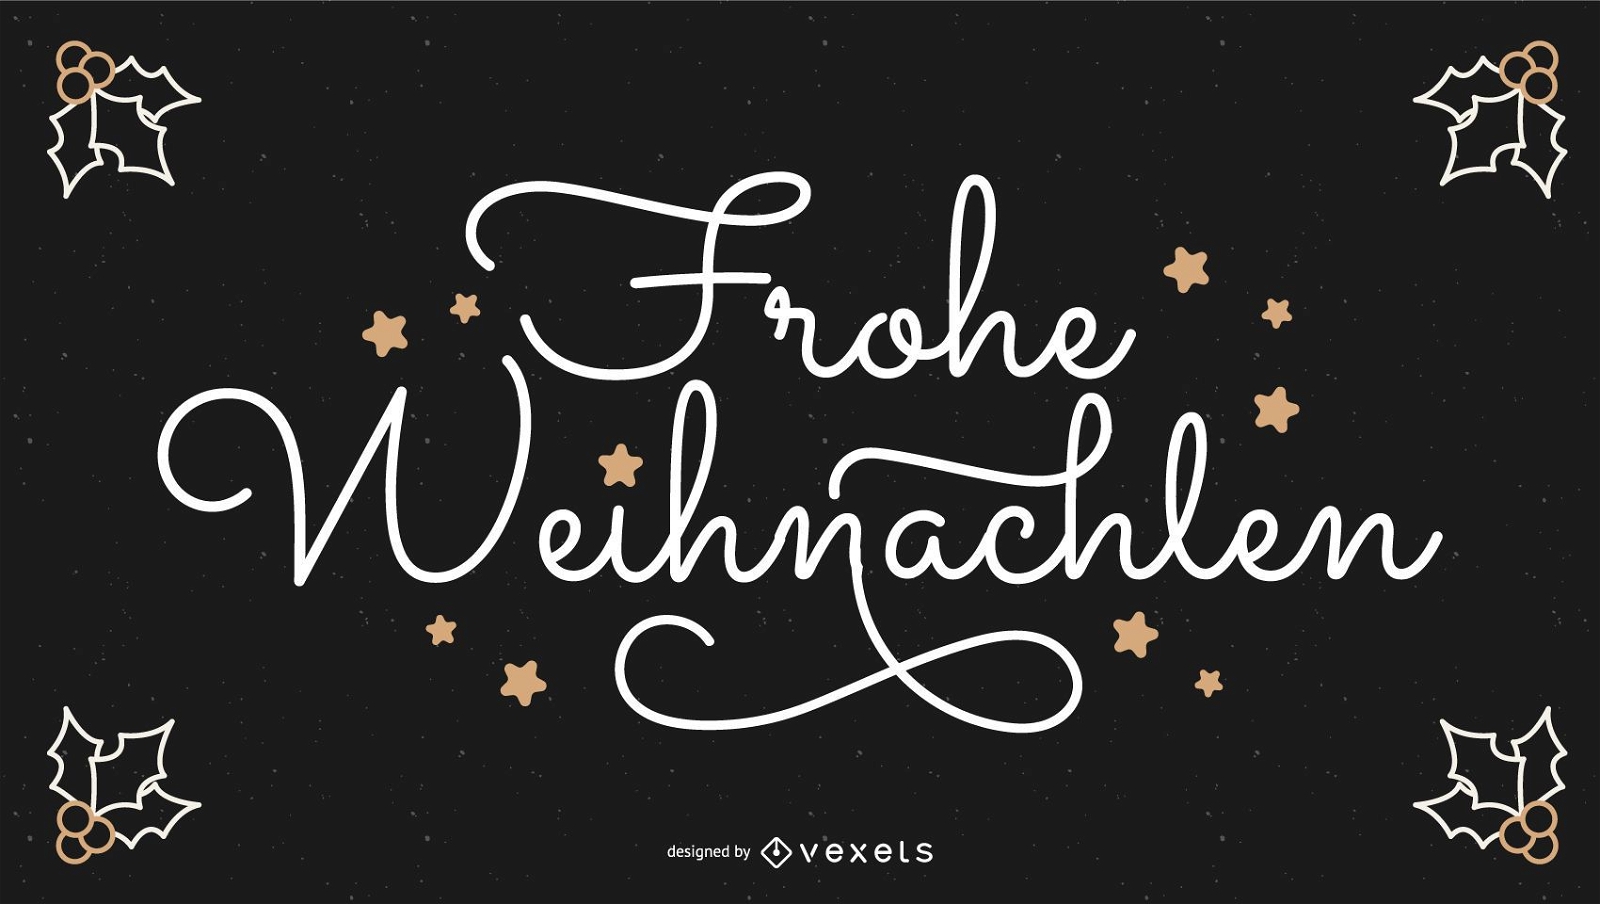 Frohe Weihnachten German Christmas Quote Banner